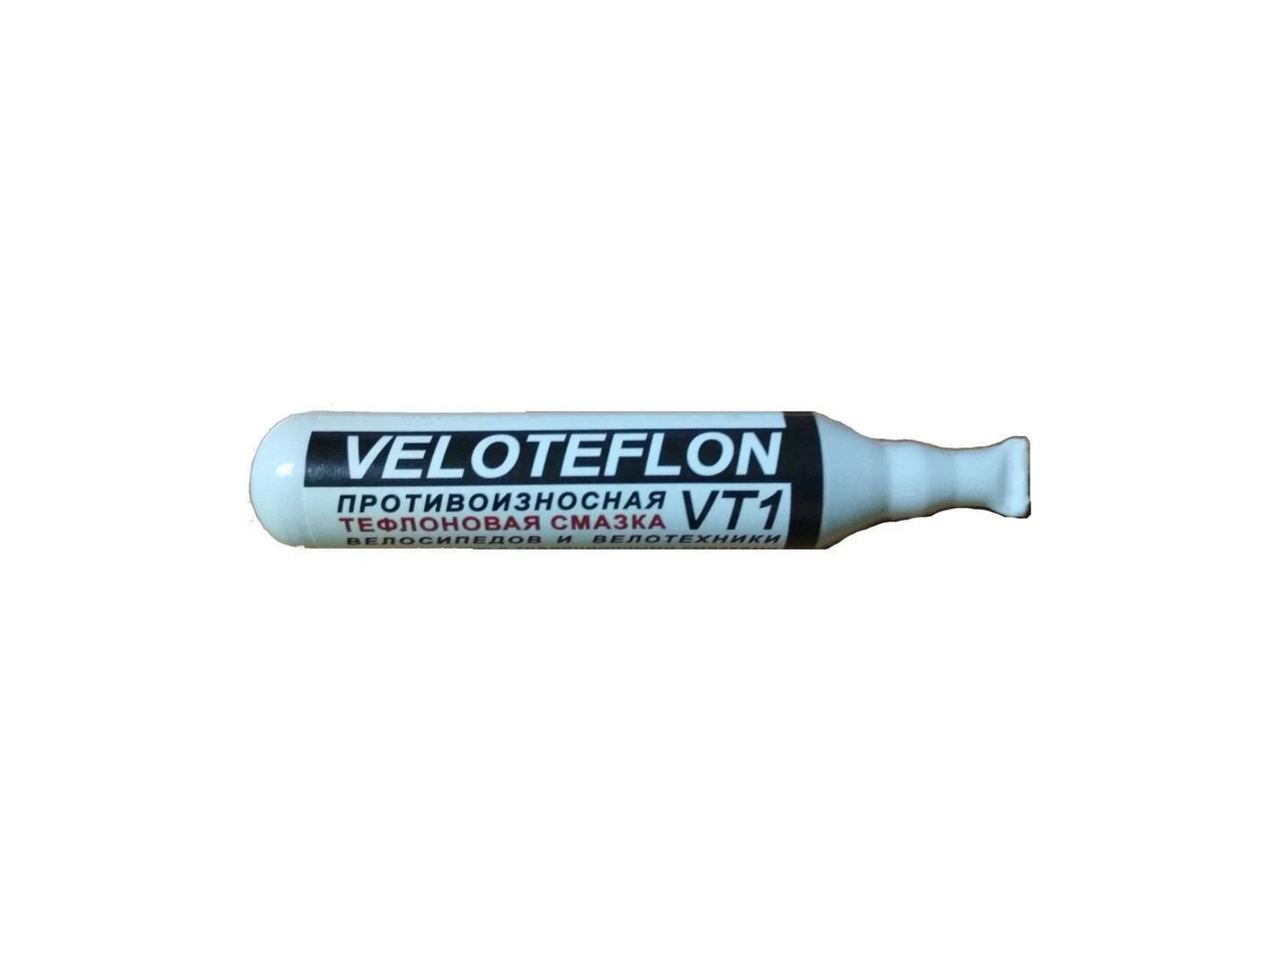 Змазка тефлонова Veloteflon VT1, густа 14 грам, фото 1